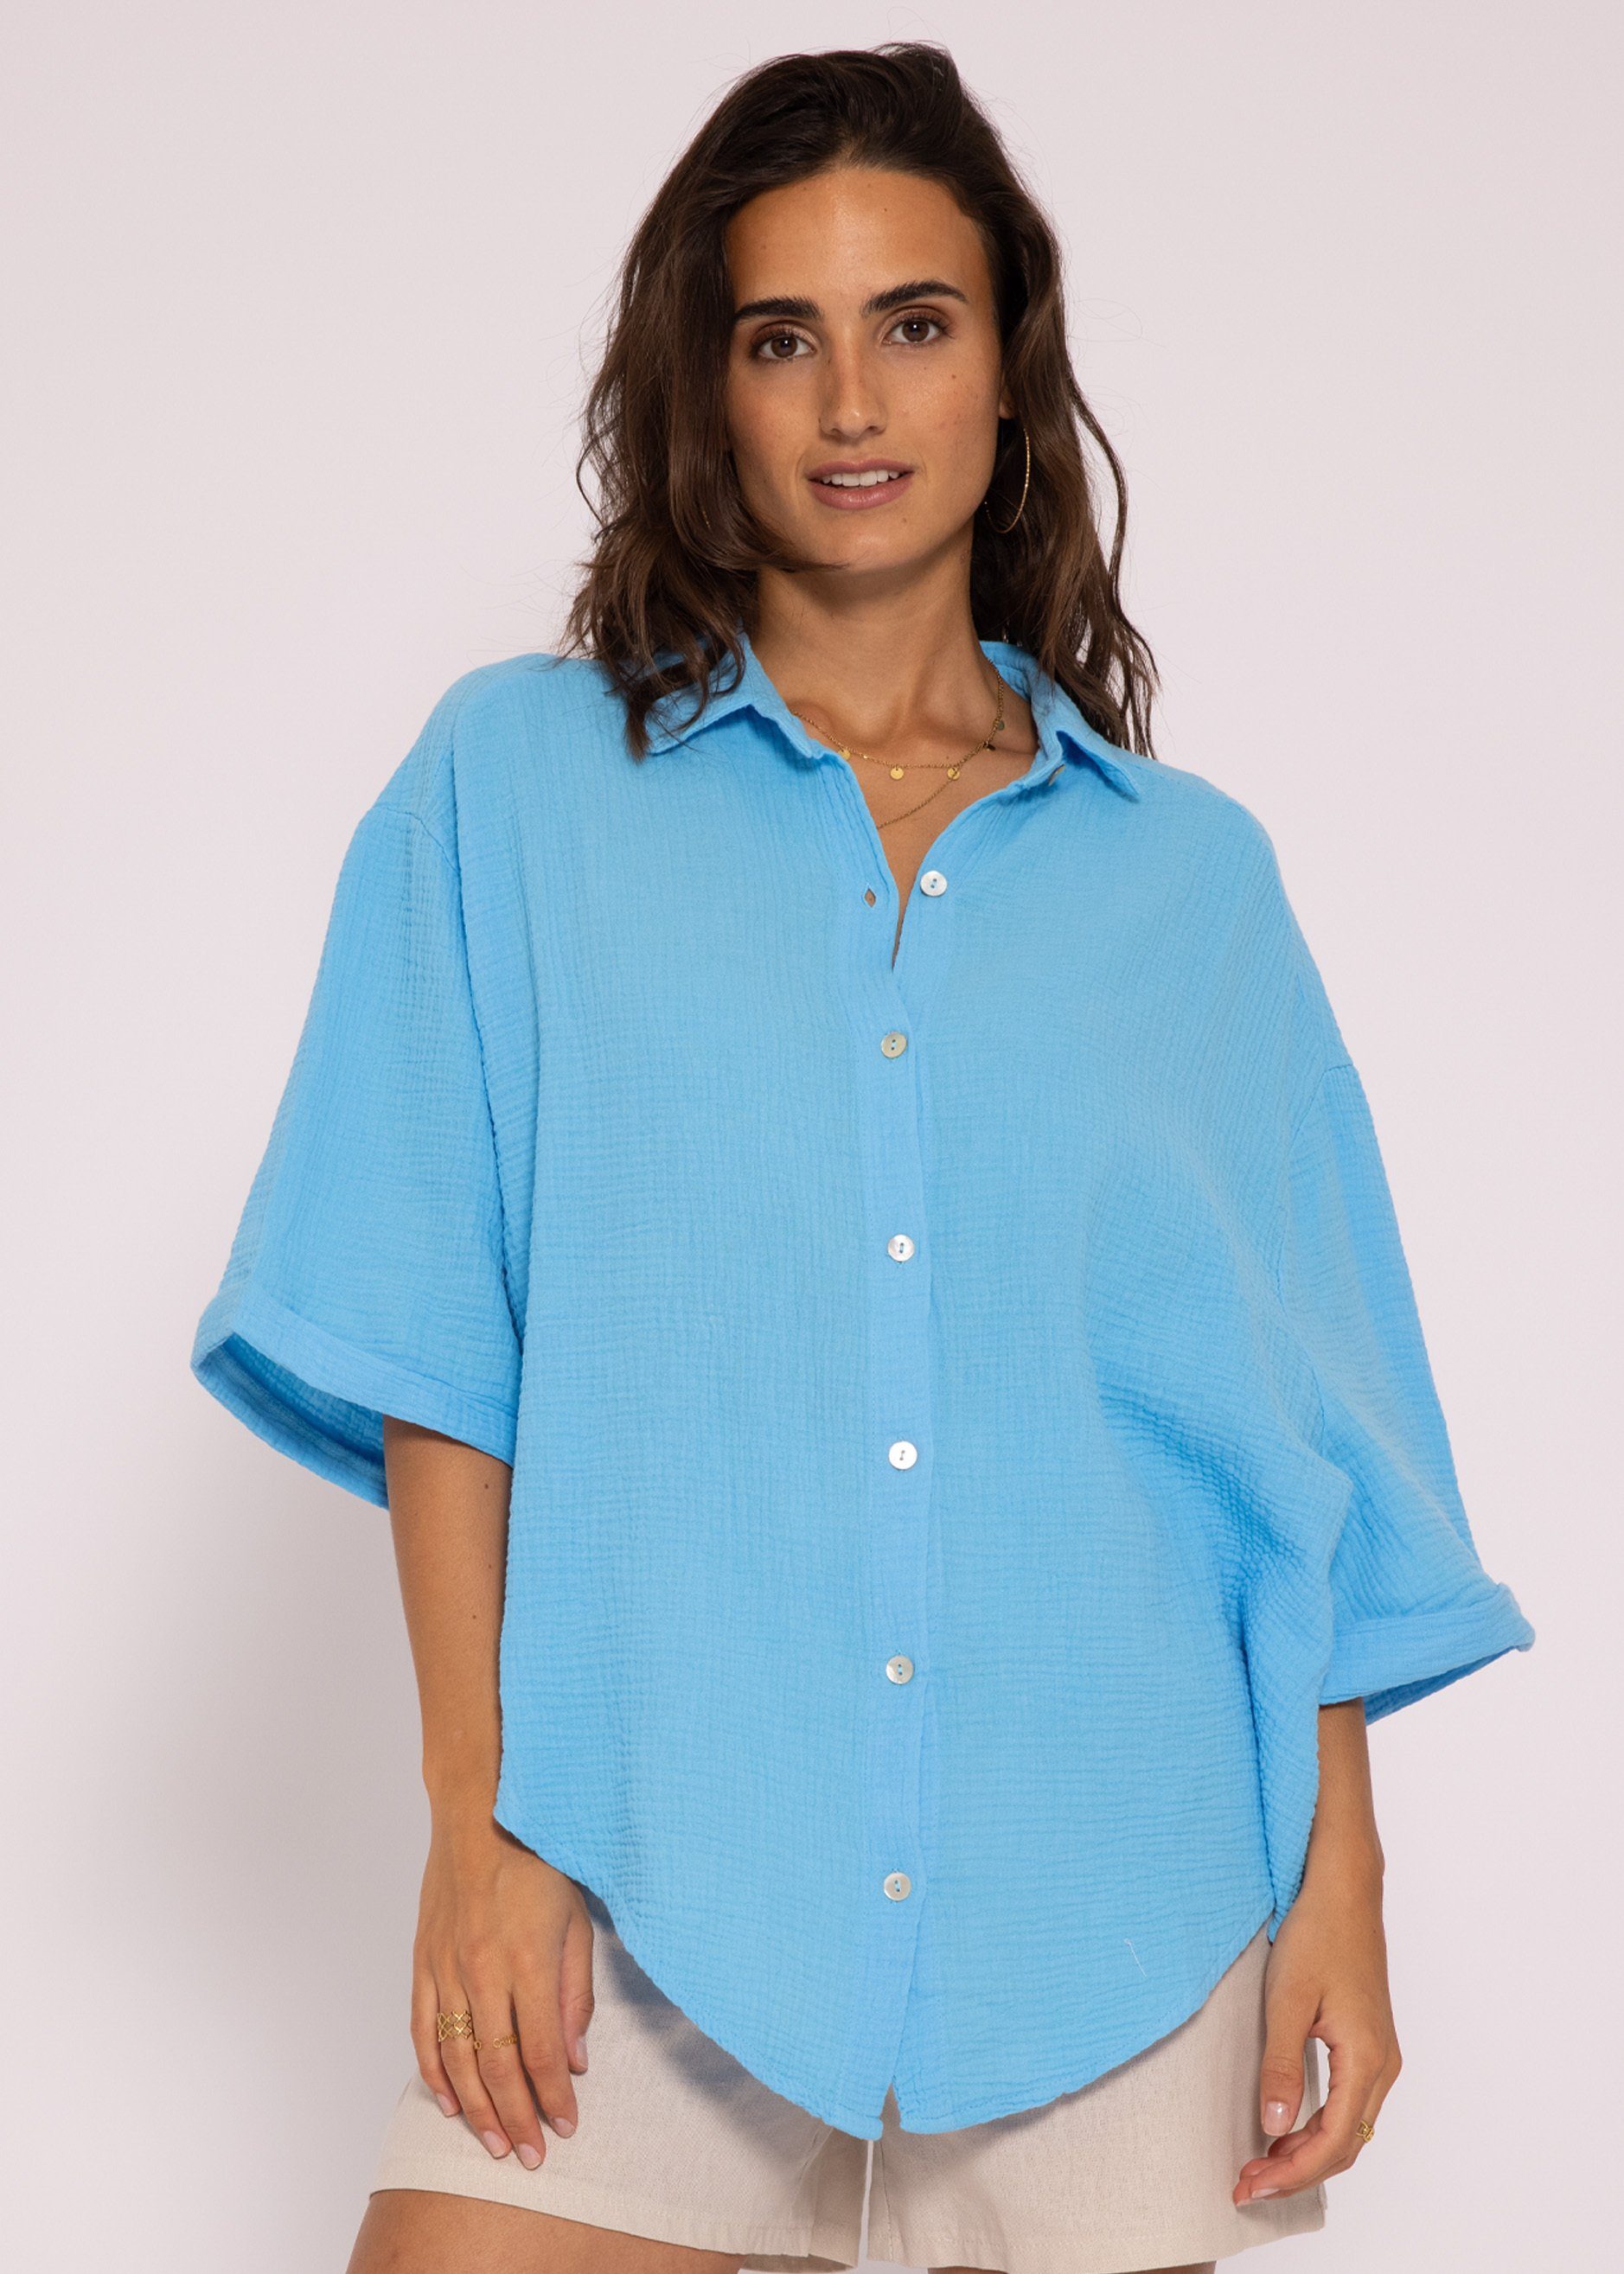 SASSYCLASSY Kurzarmbluse Oversize Musselin Bluse Damen kurzarm Shirt Bluse  aus Musselin Baumwolle, Made in Italy, One Size: Gr. 36-48